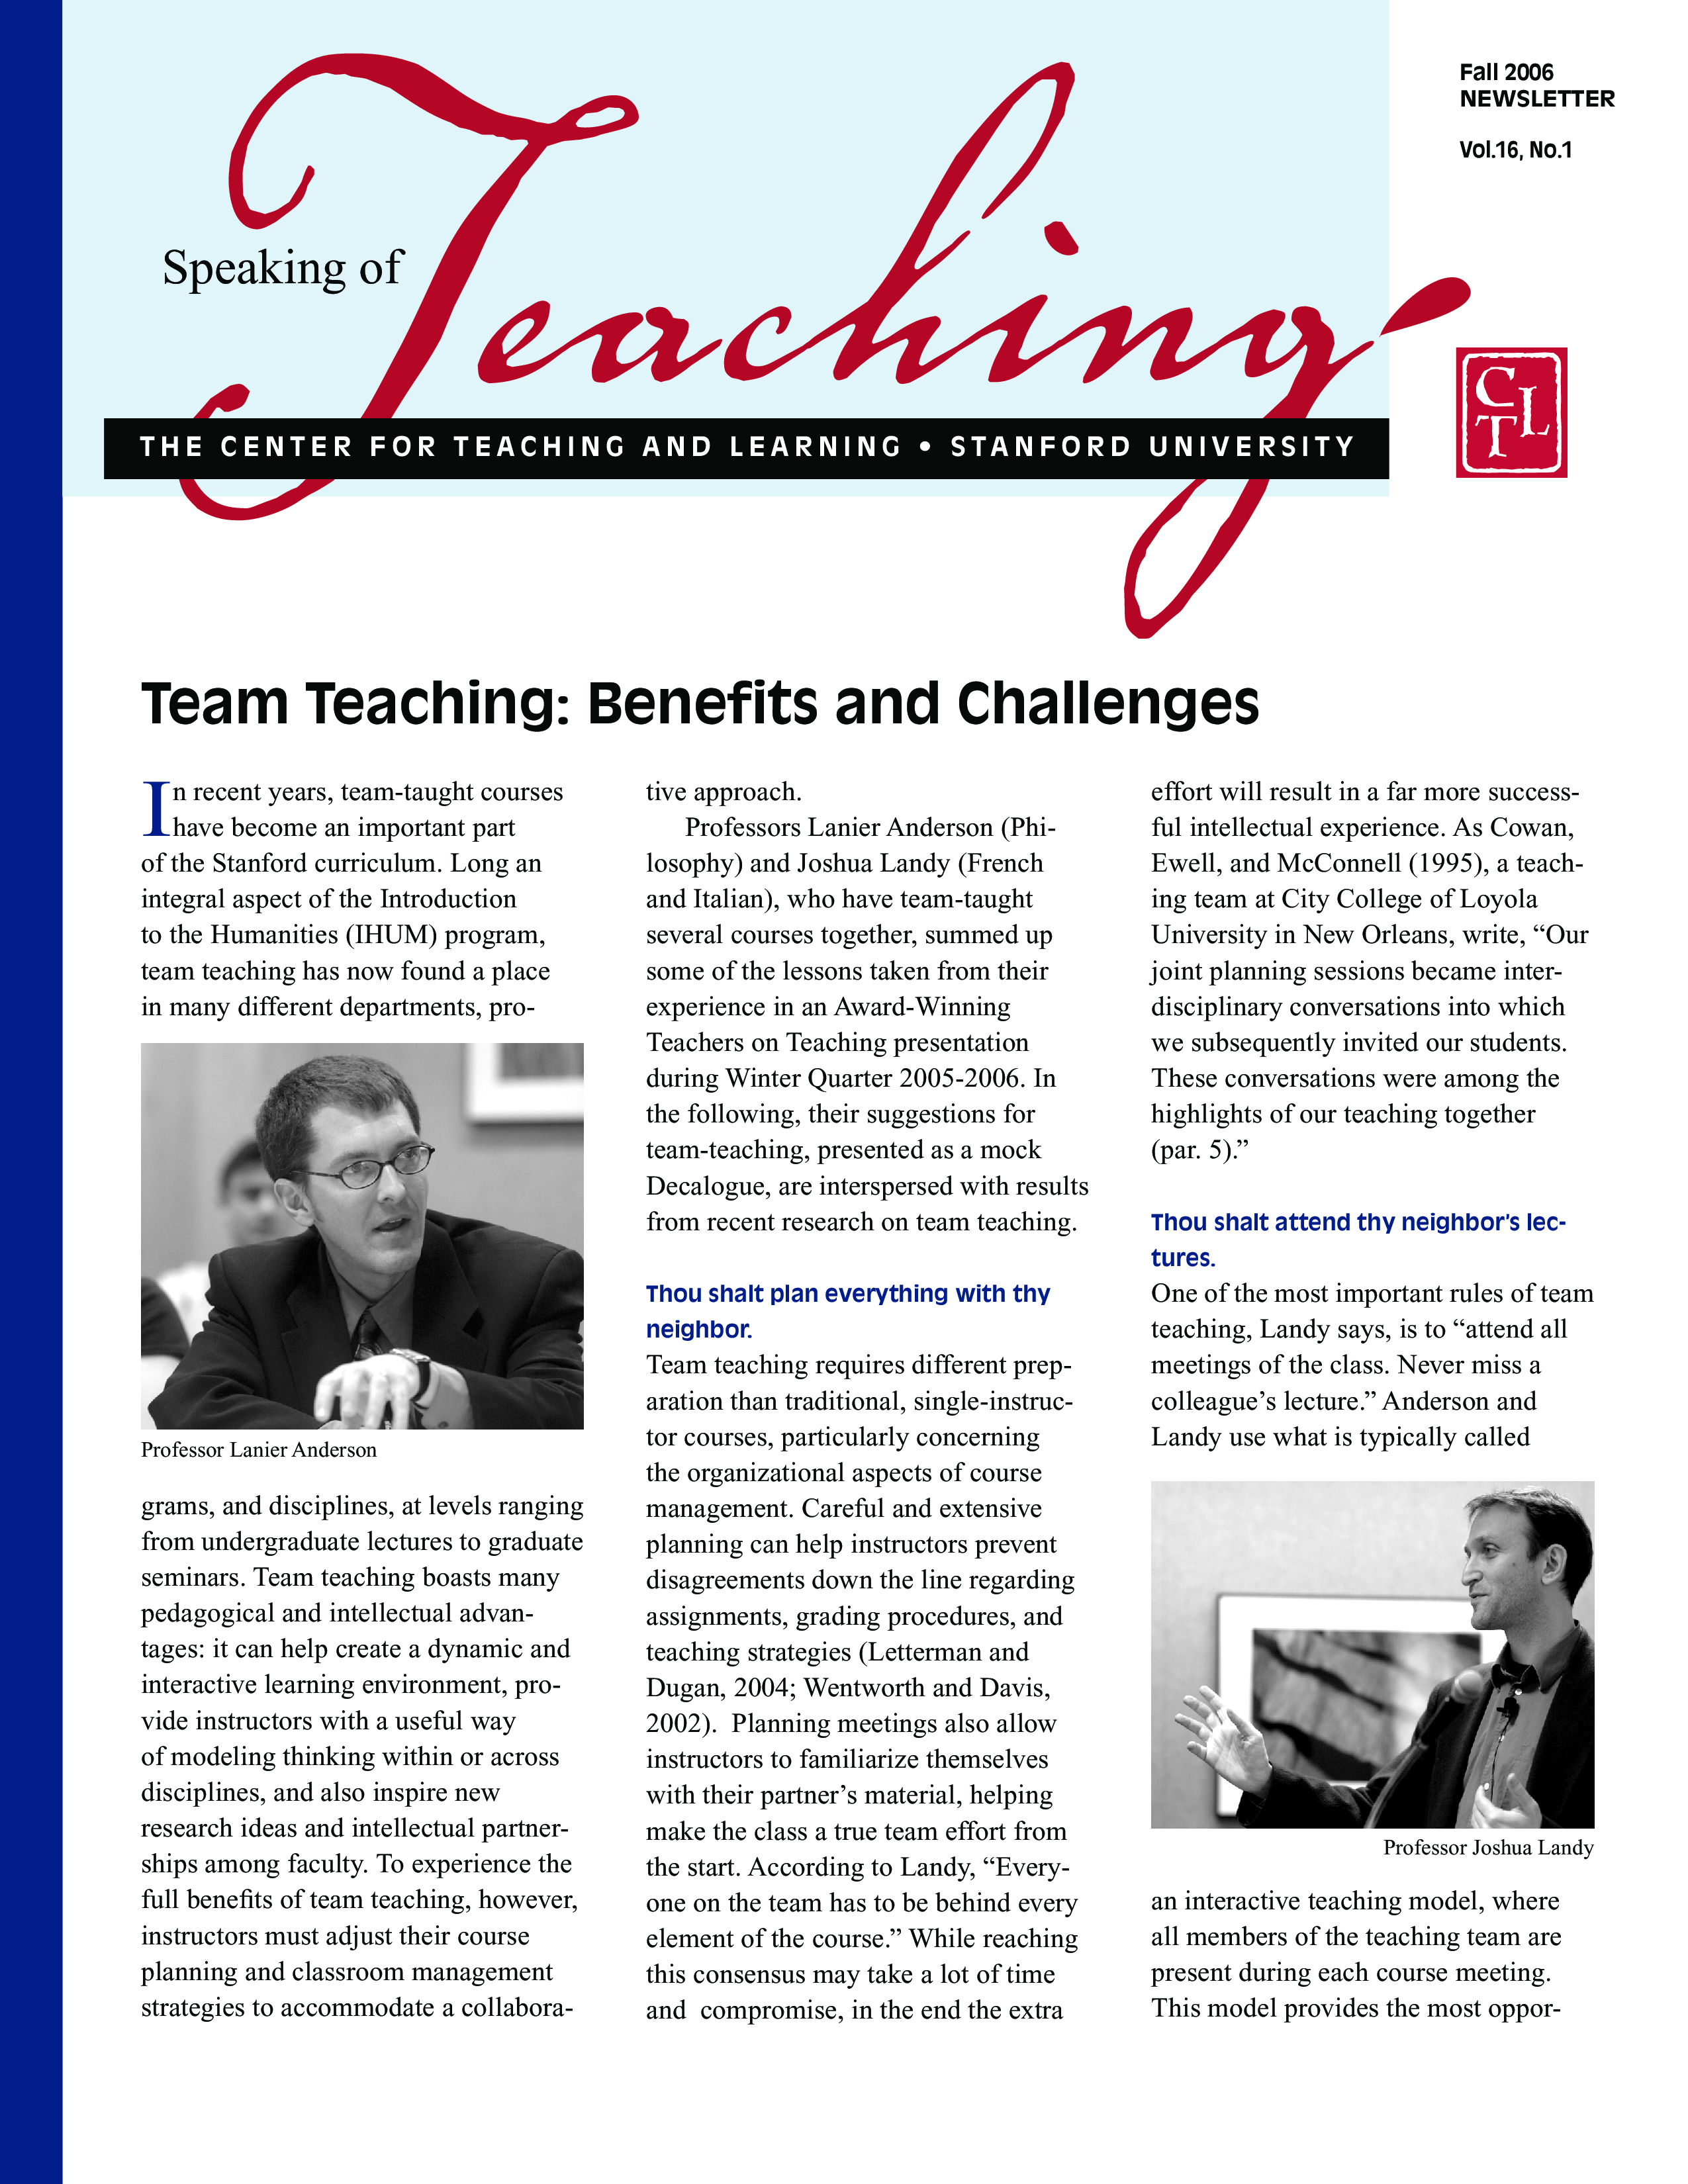 Newsletters For Teachers main image